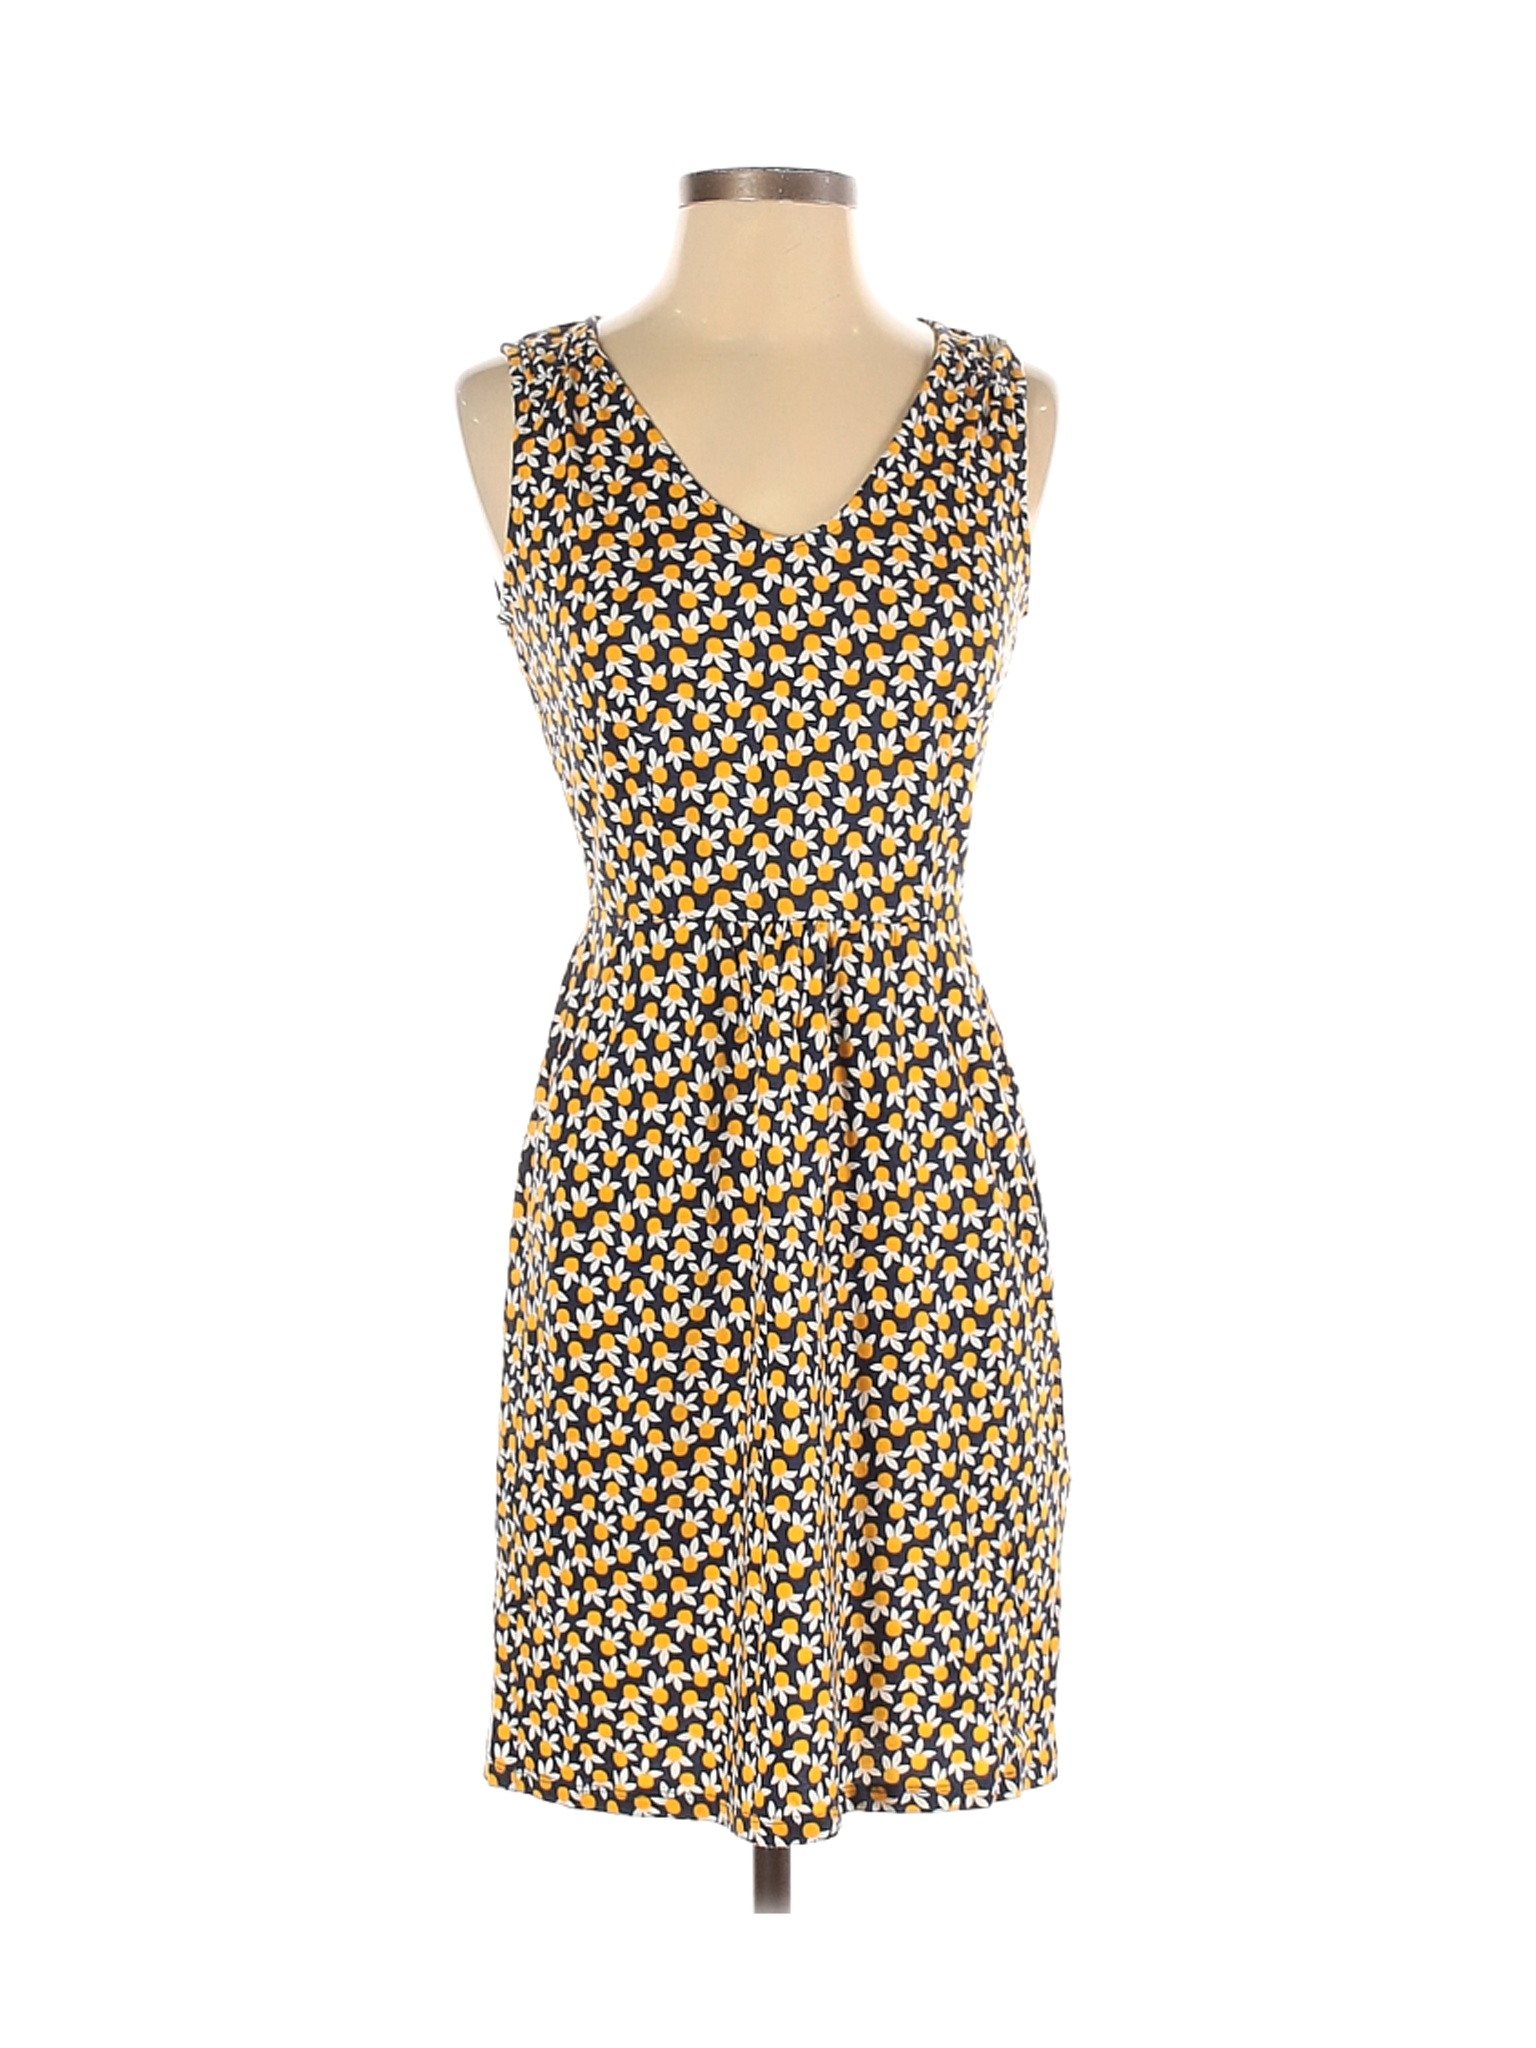 Boden Women Yellow Casual Dress 4 Petites | eBay